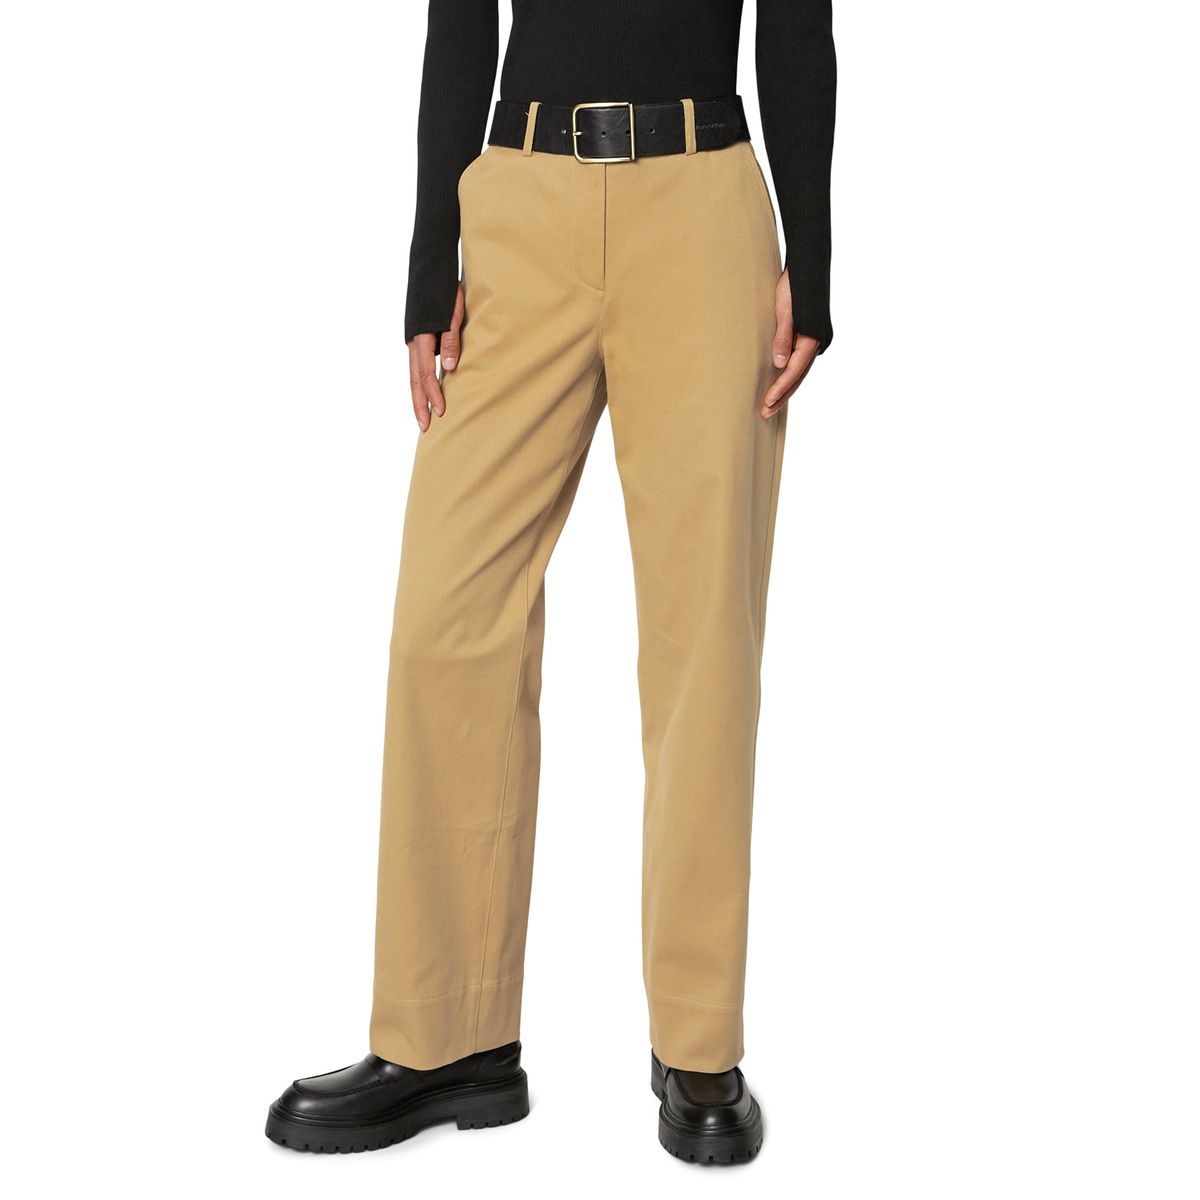 Pantalon en laine merinos jambe large en maille jersey et motif